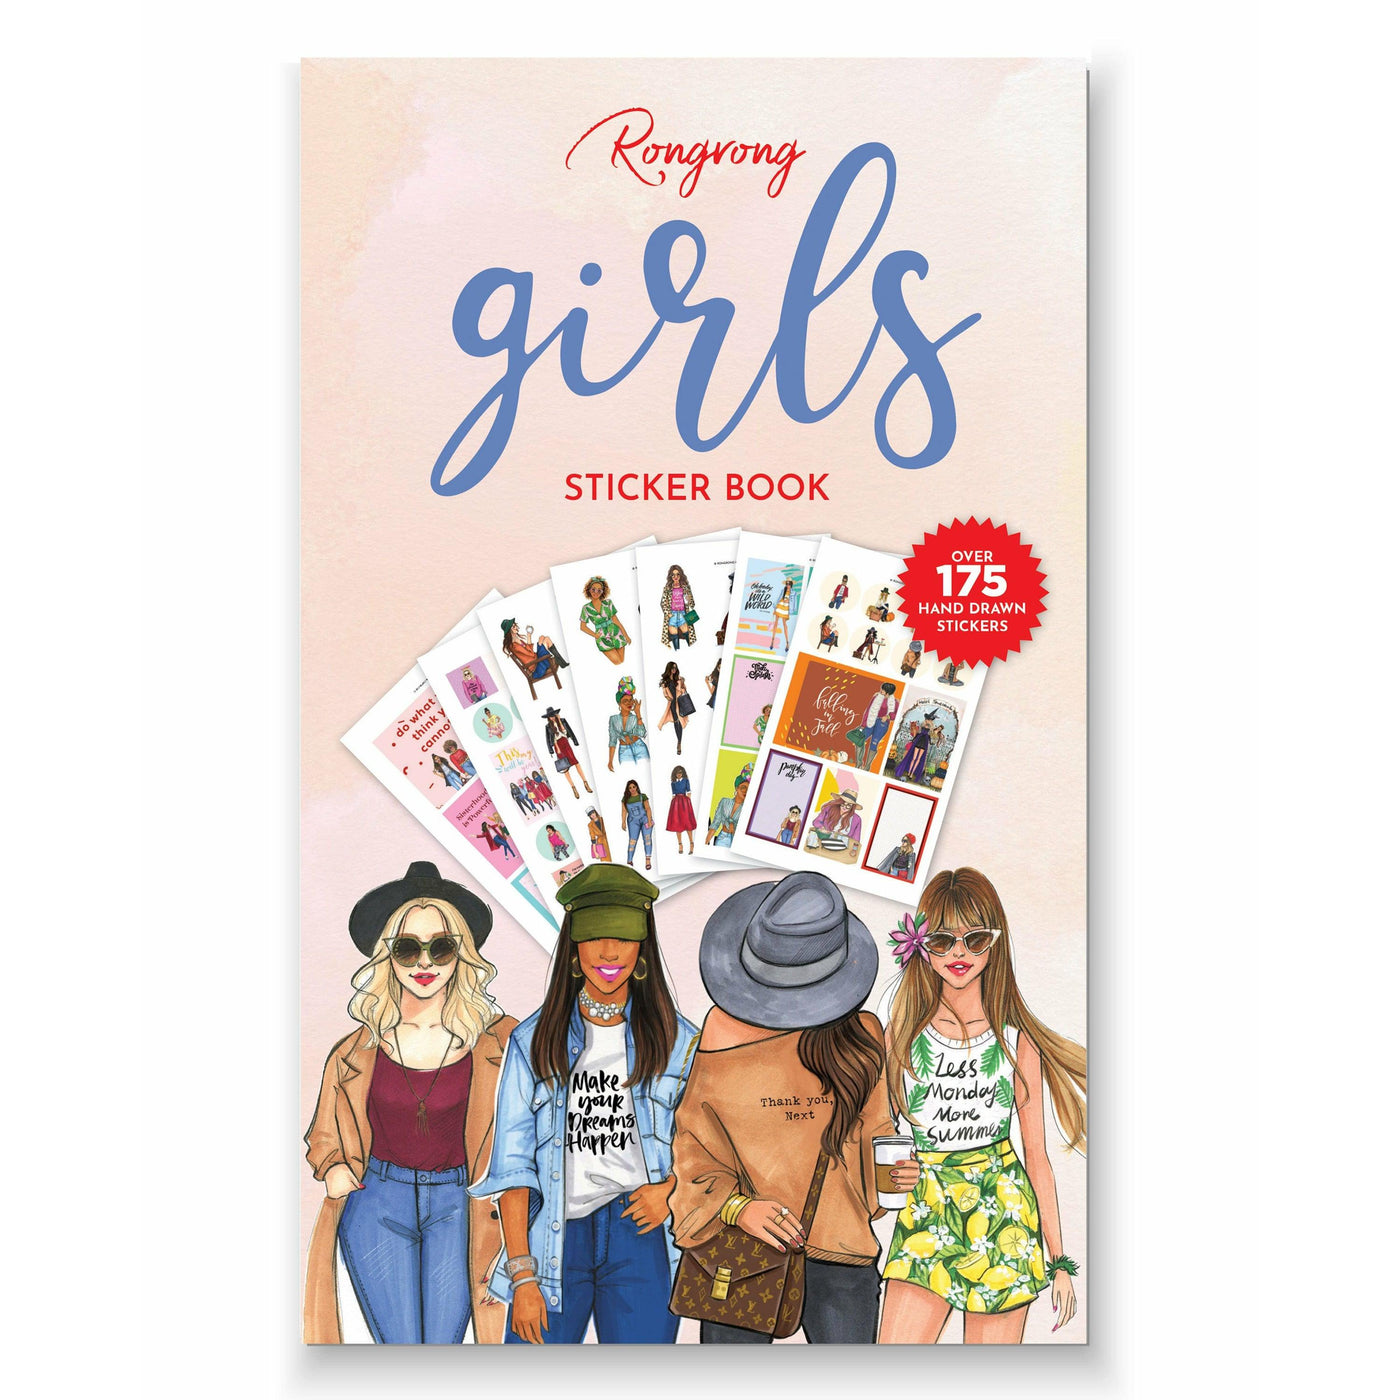 Fashionista Girls Sticker Book by Rongrong DeVoe